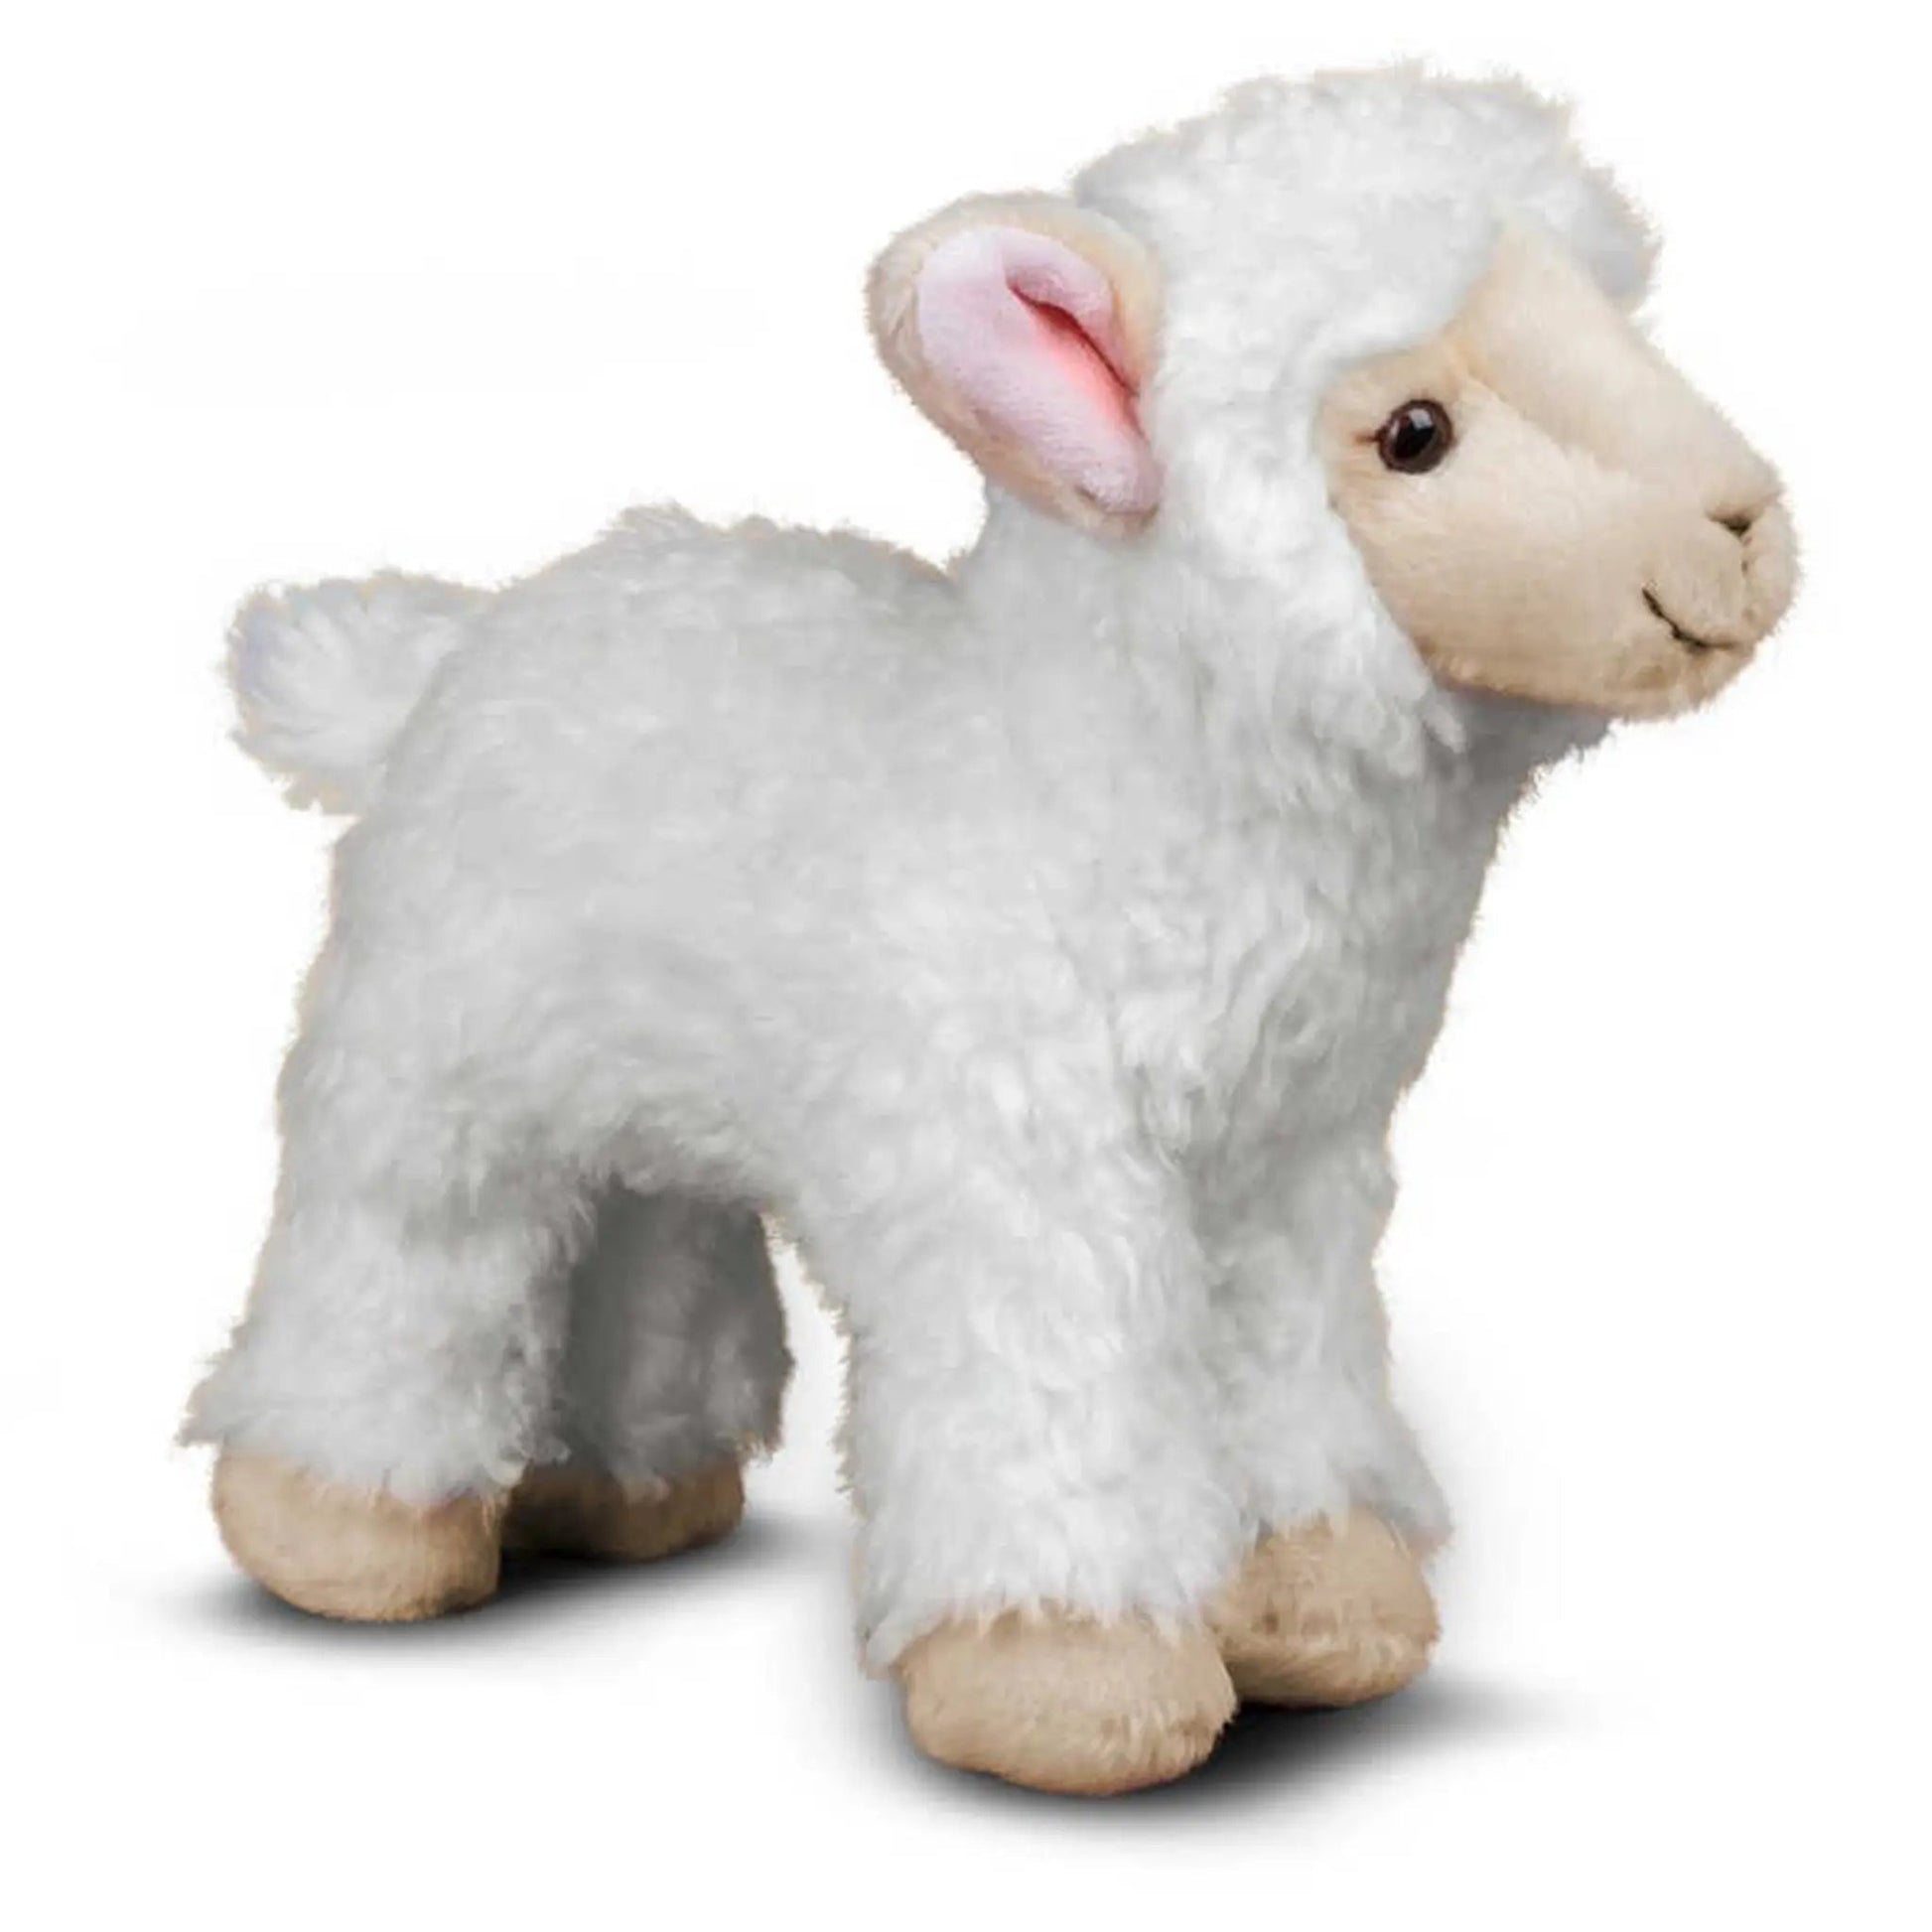 Animigos World of Nature - Lamb - Tobar - The Forgotten Toy Shop